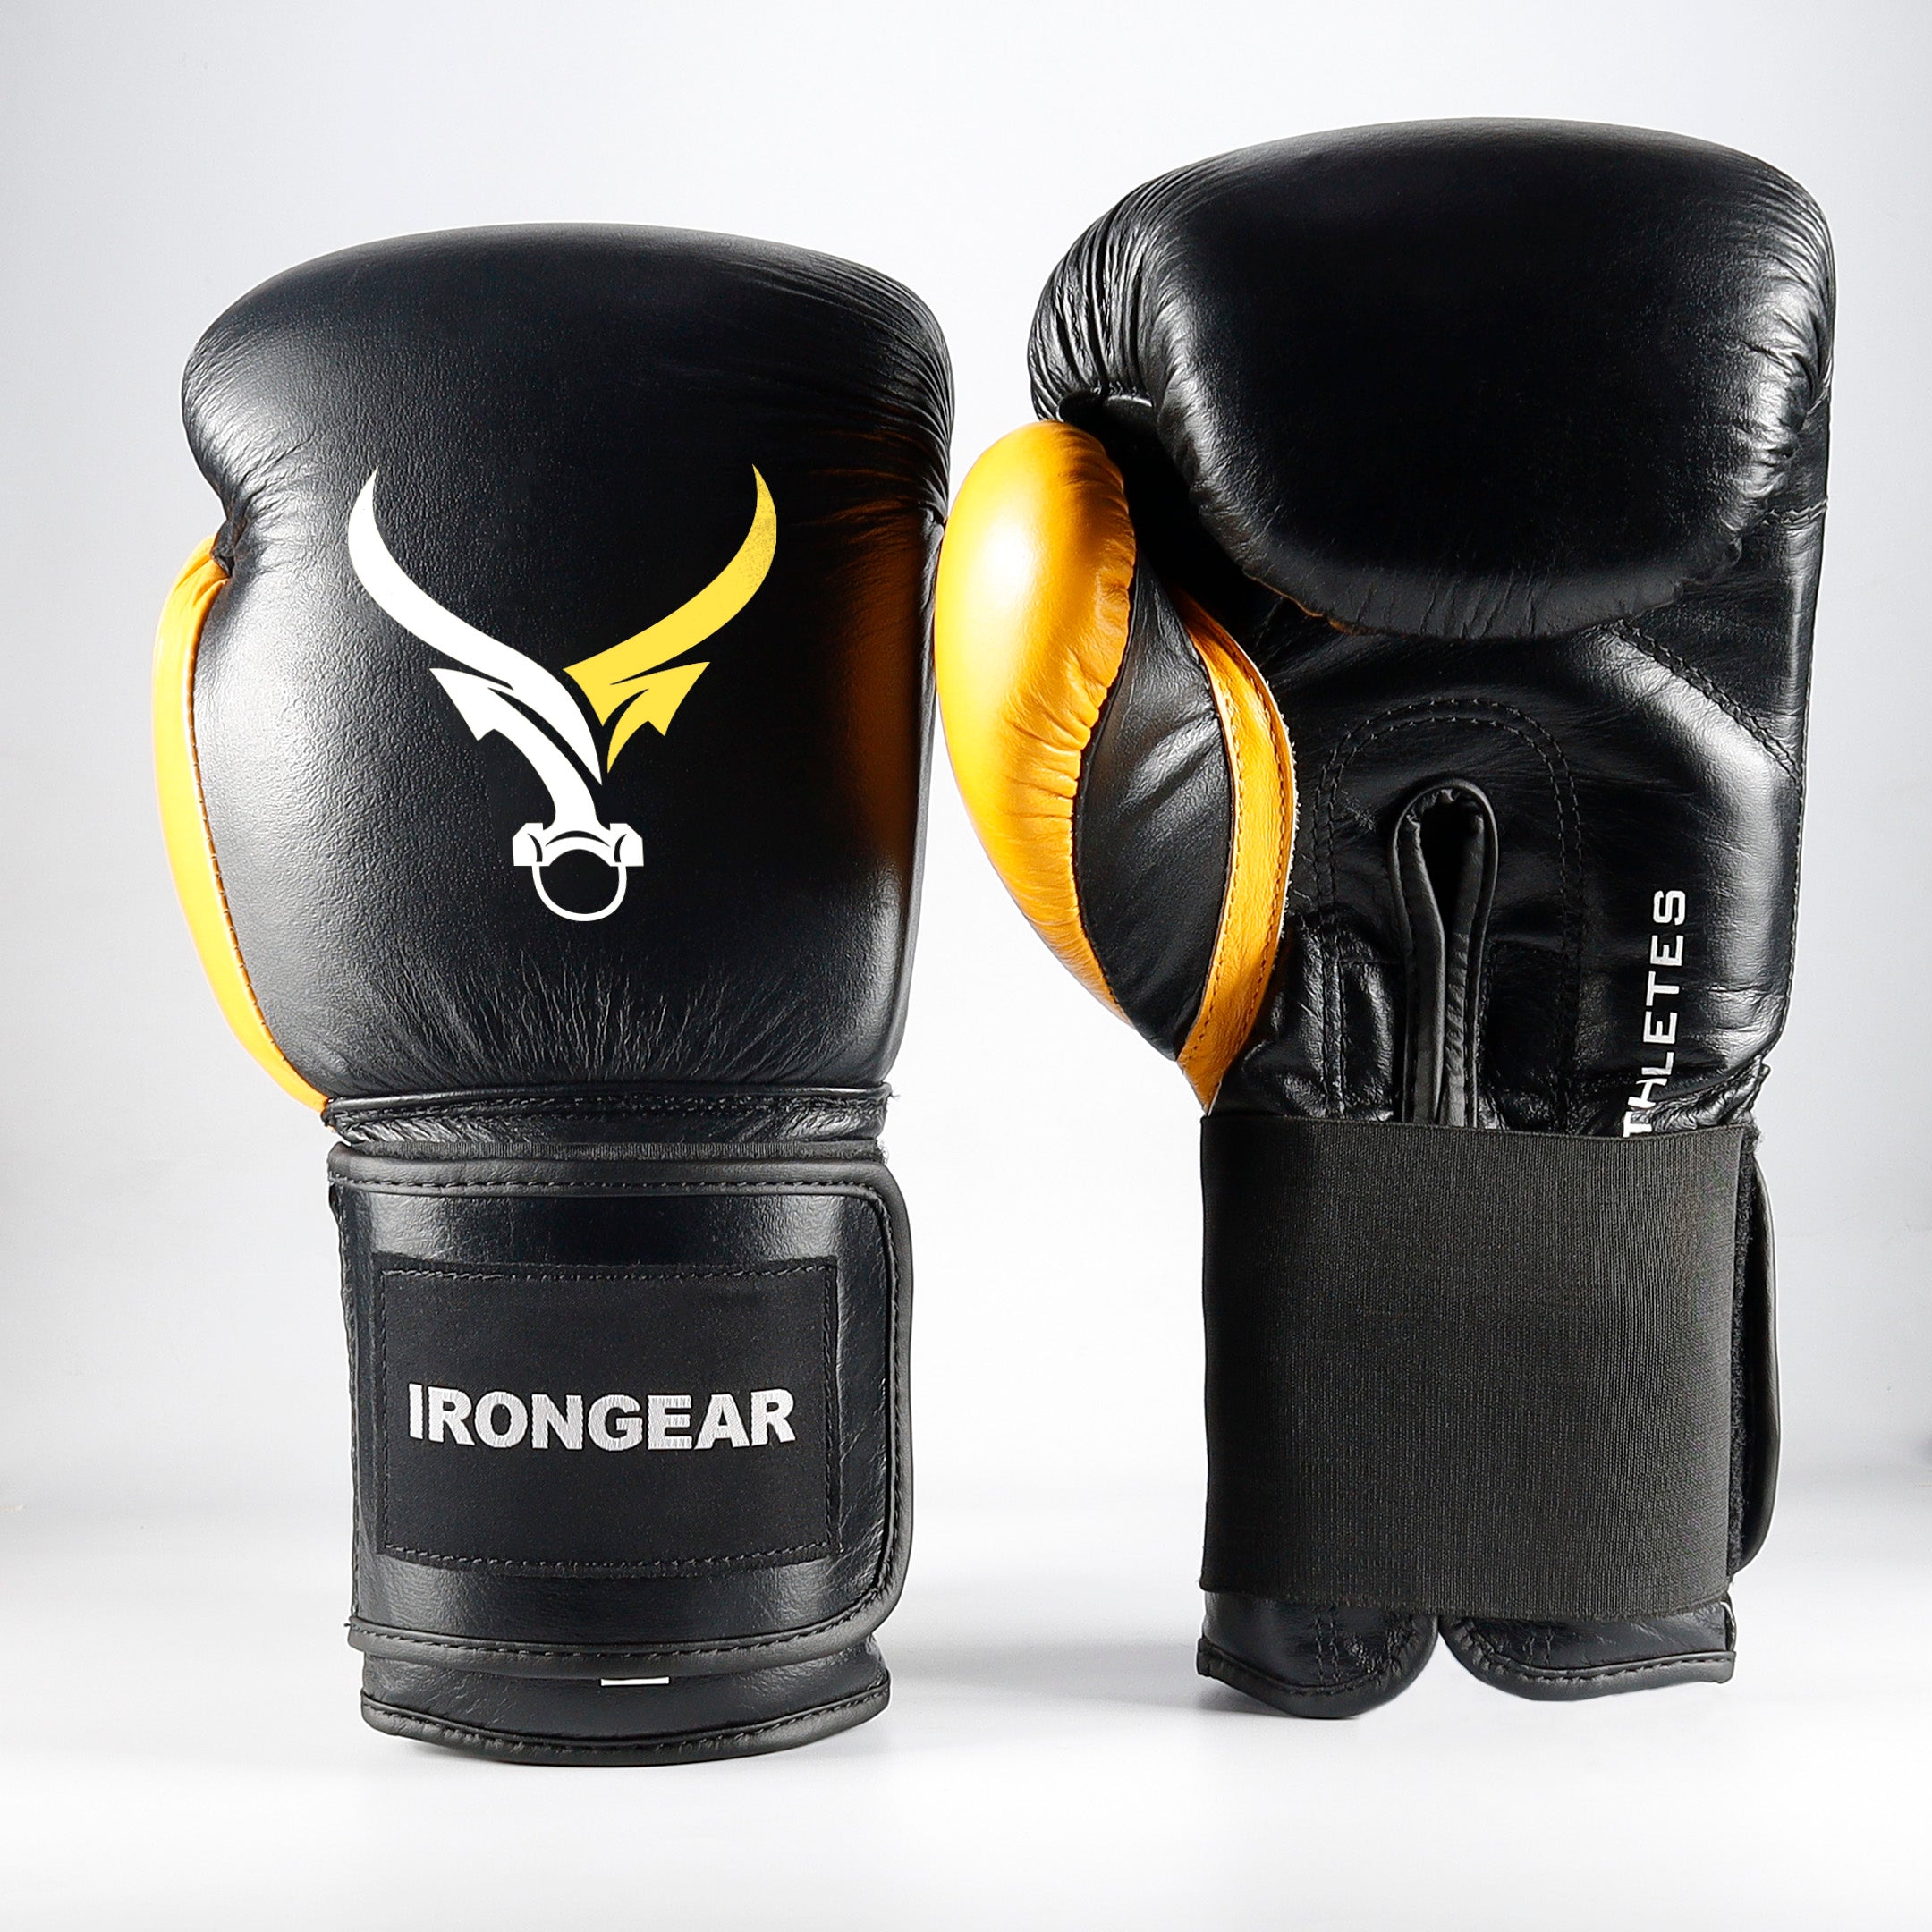 IRONGEAR Boxing Gloves